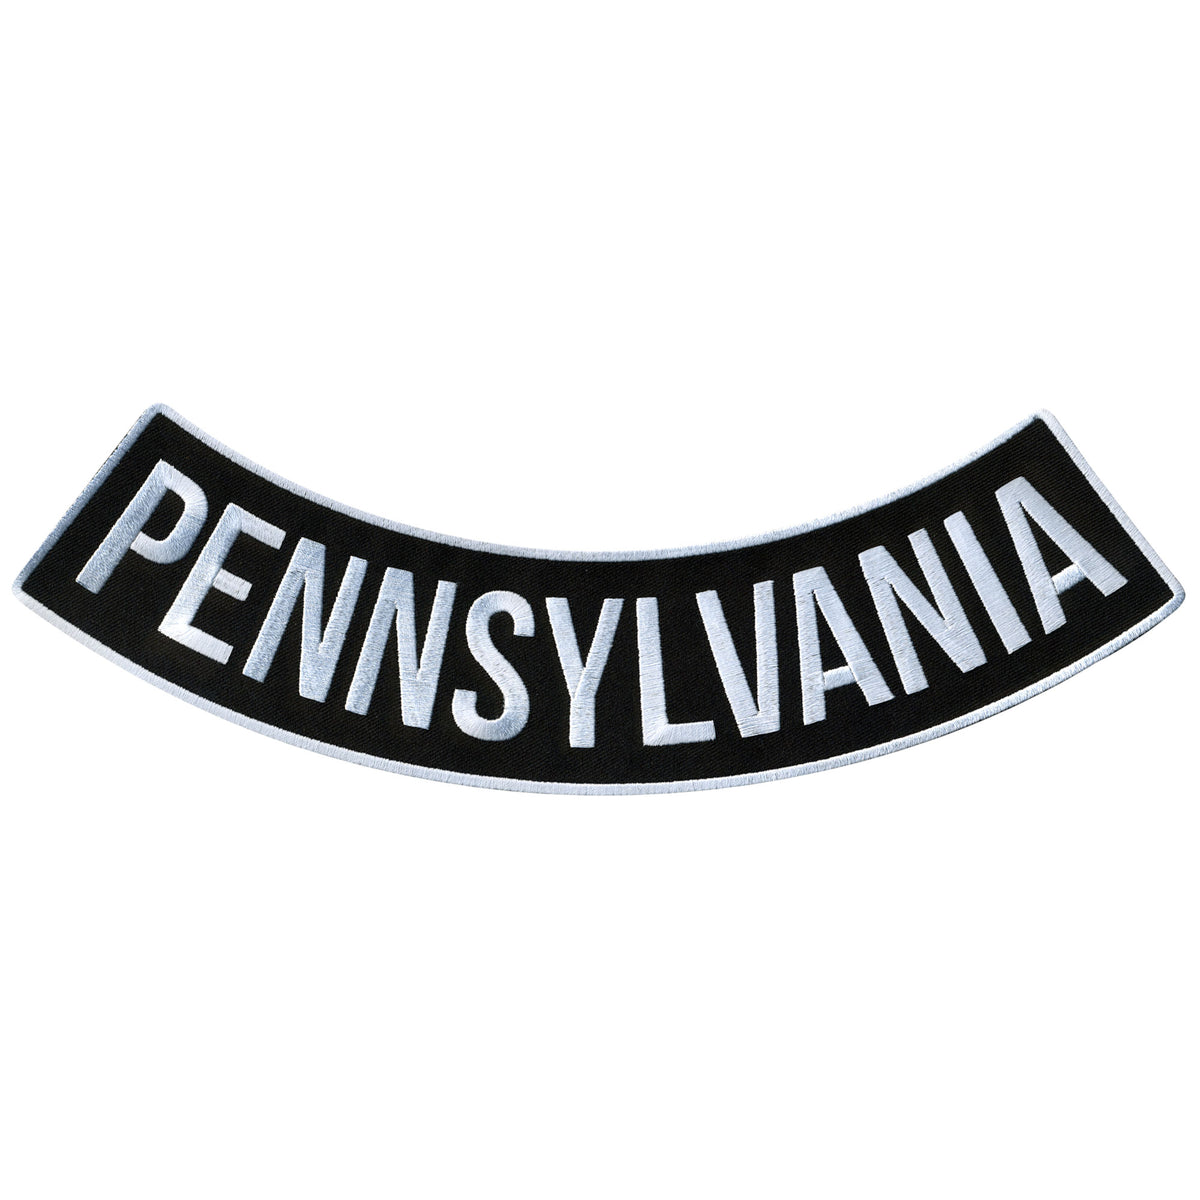 Hot Leathers Pennsylvania 12” X 3” Bottom Rocker Patch